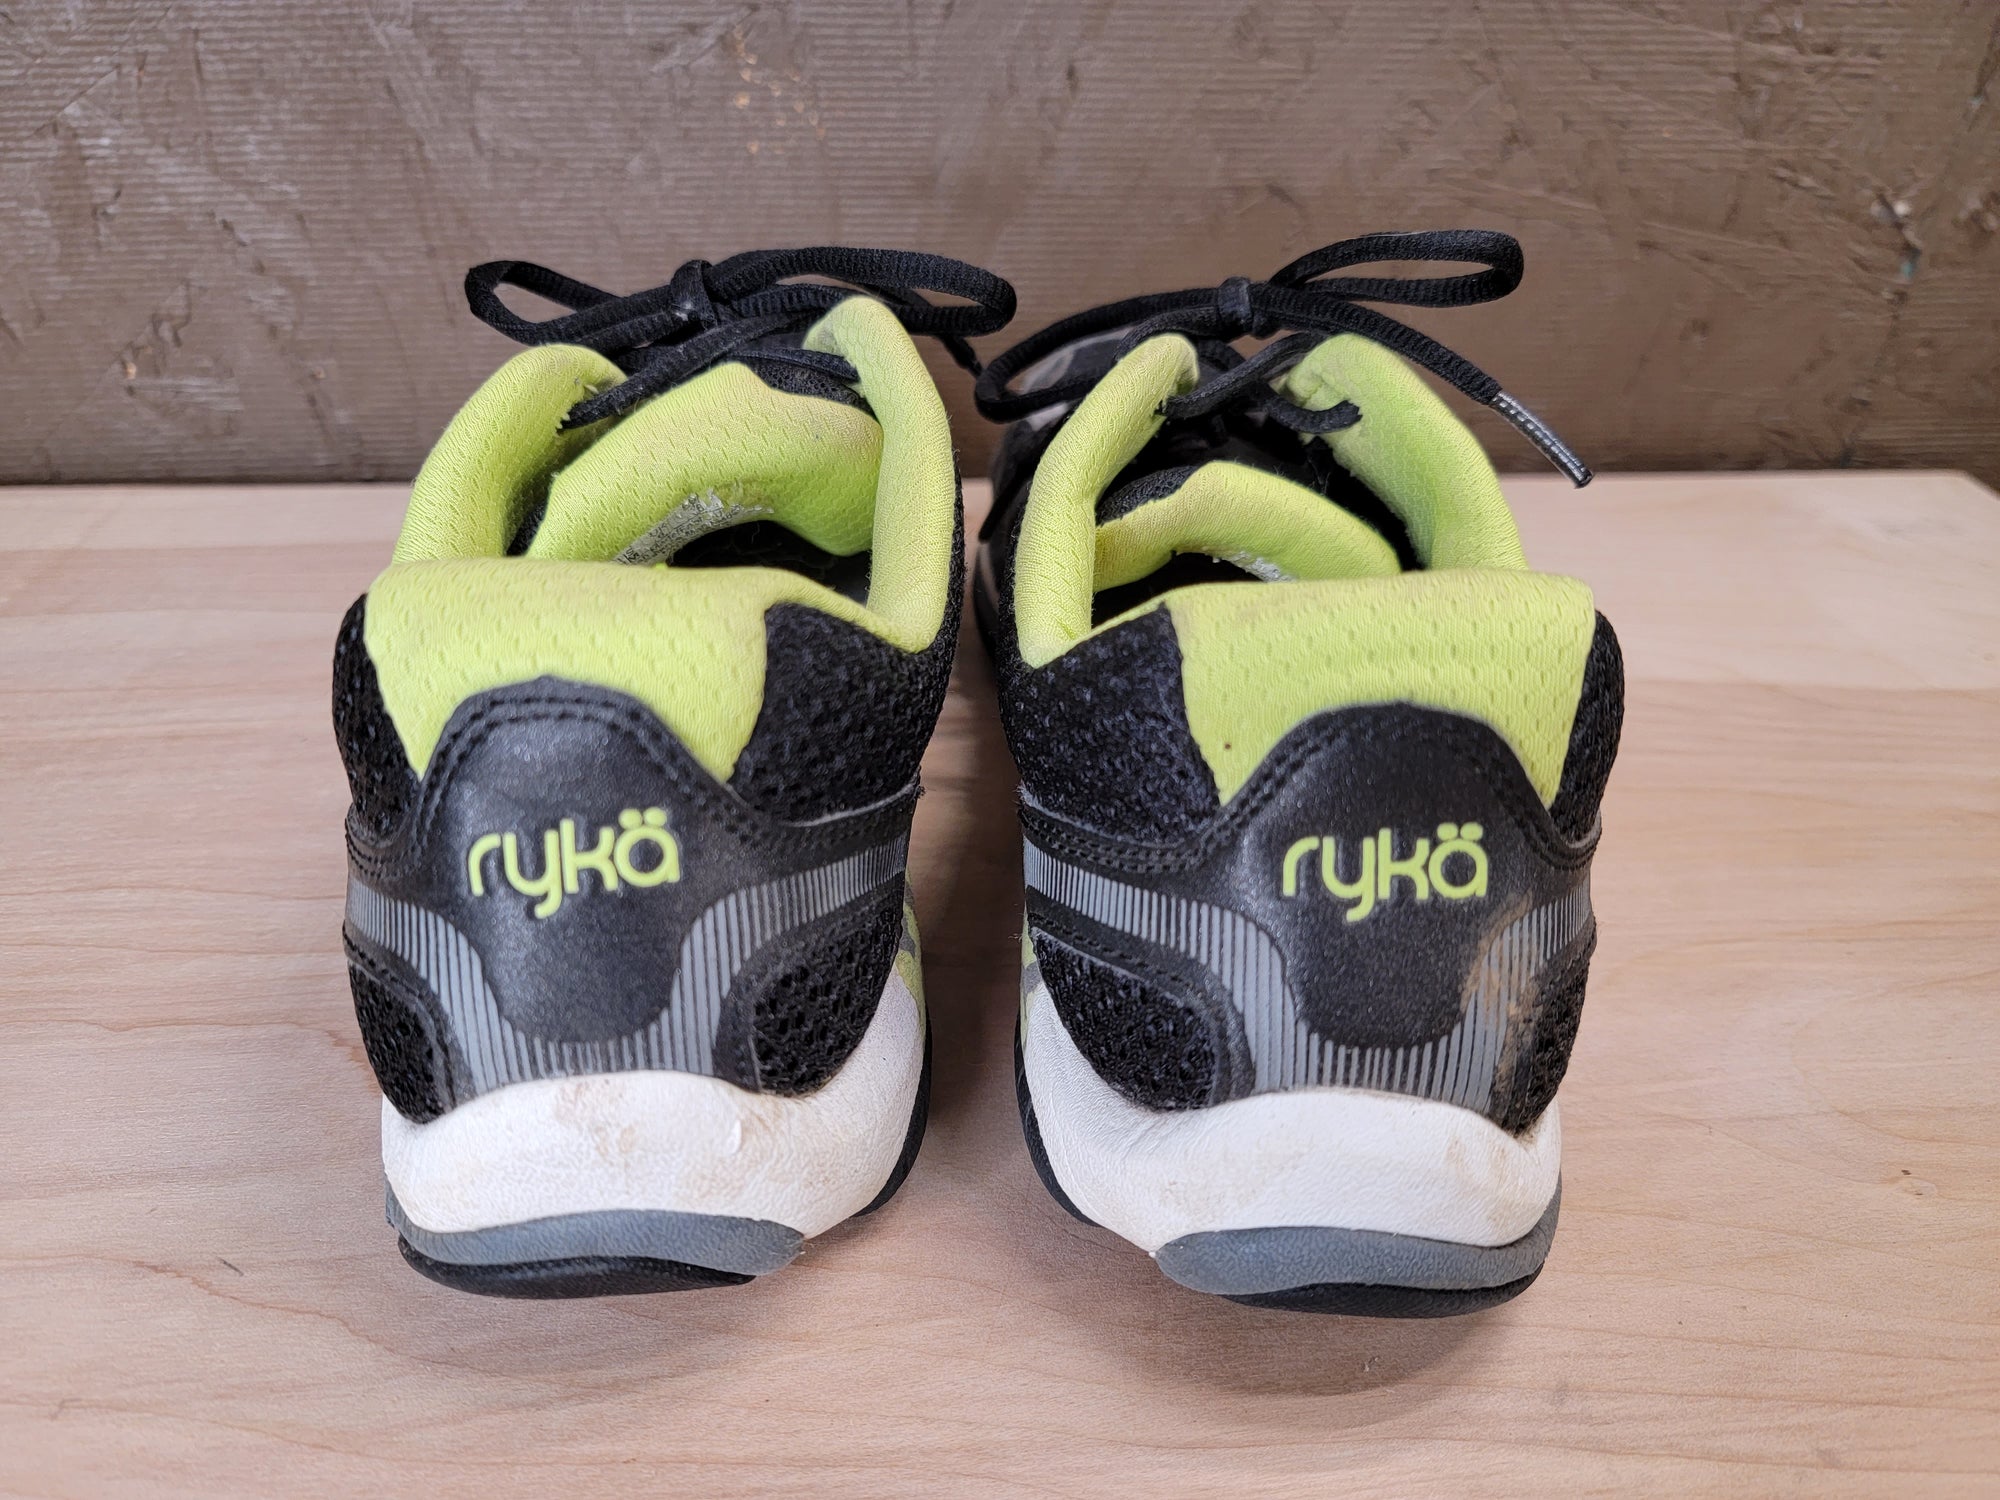 Ryka's Influence Training Shoe (Green - 8)